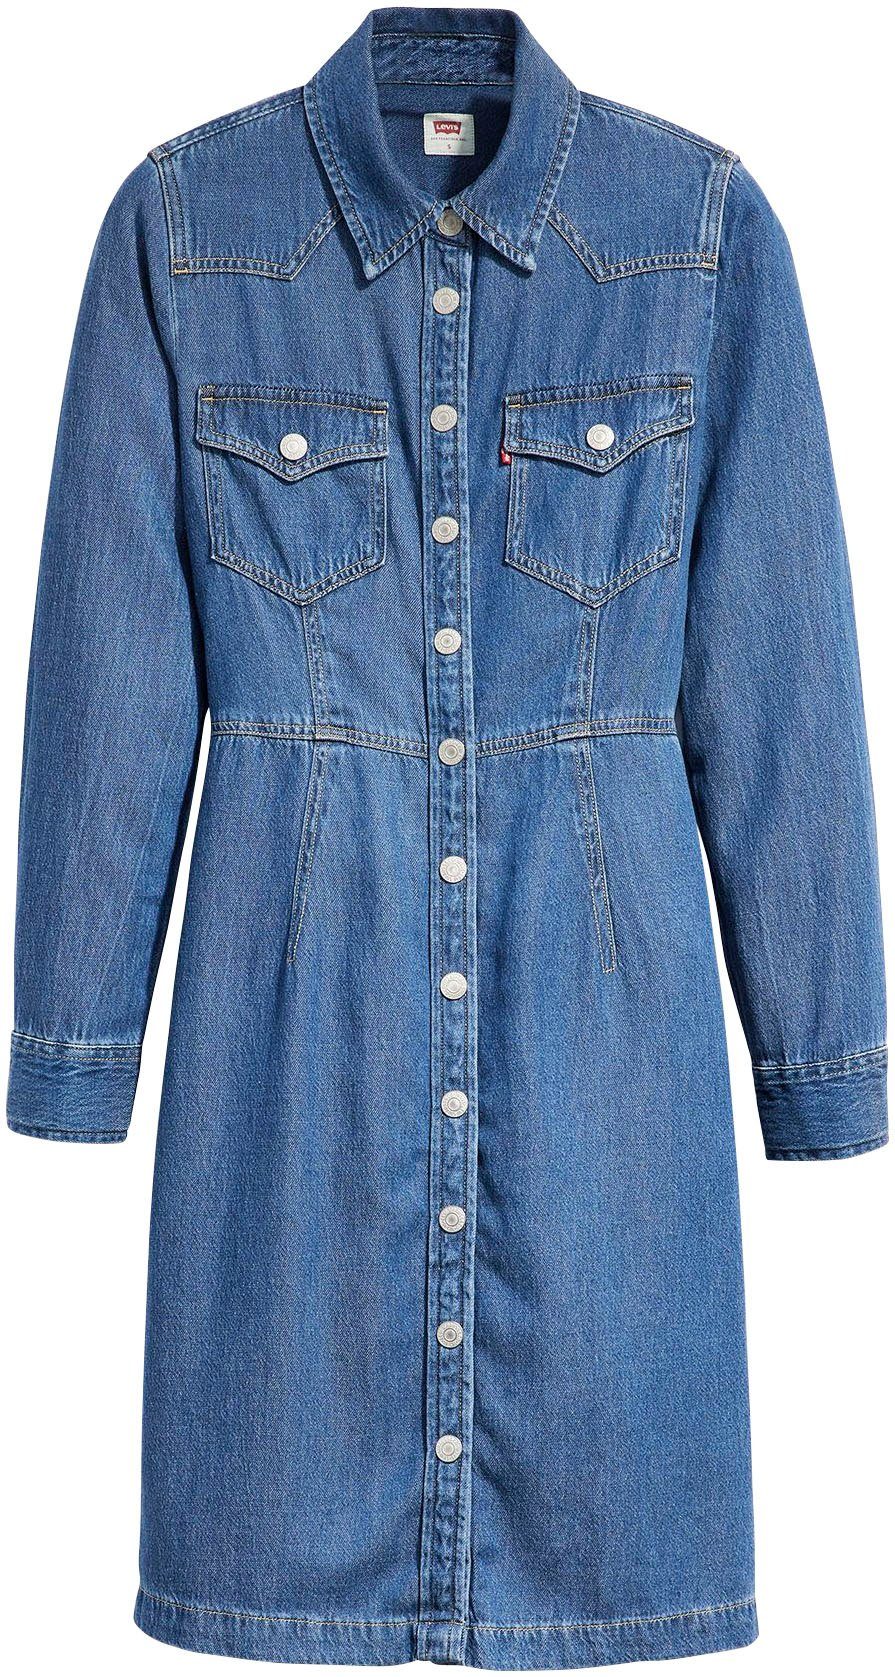 OTTO WESTERN DRESS Levi's® im Jeanskleid Westernlook blue klassischen